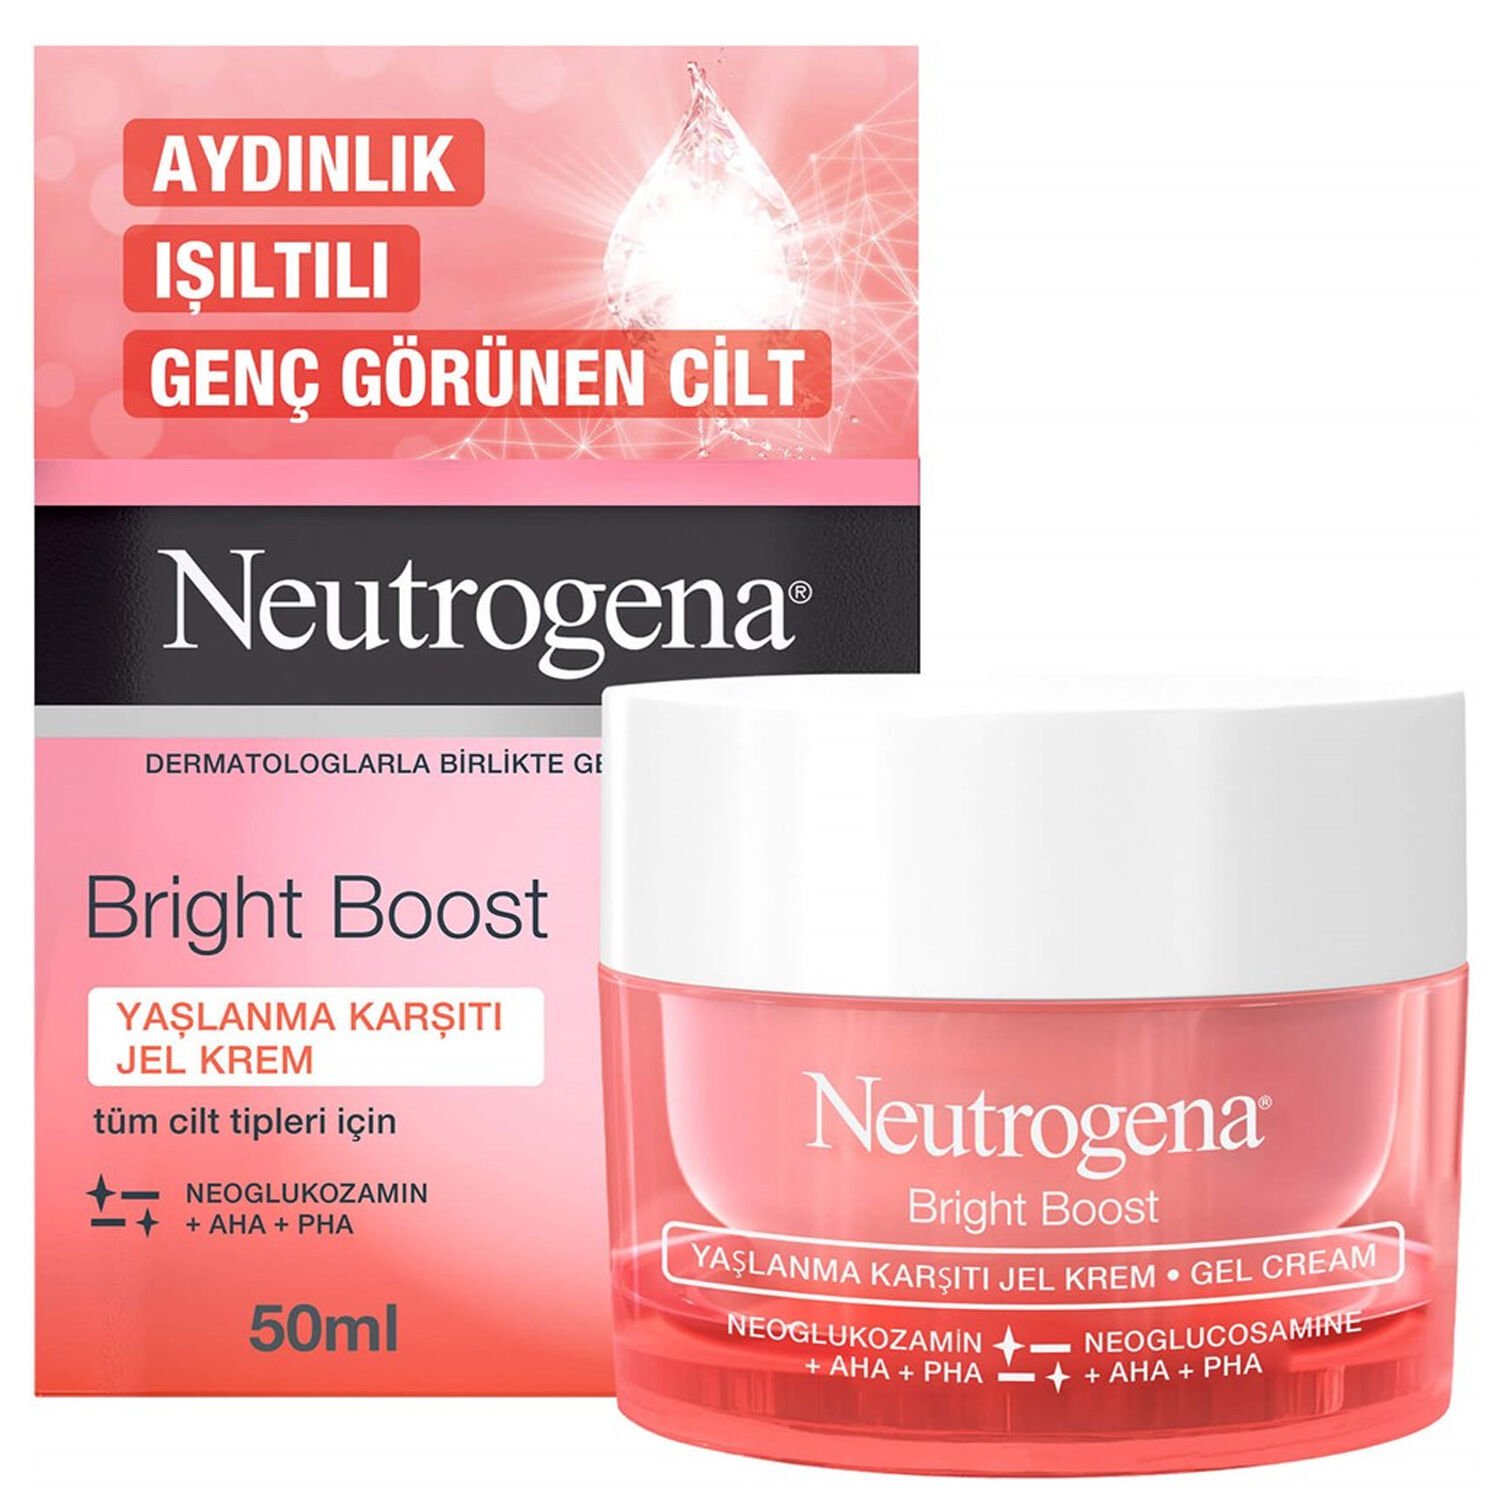 Neutrogena Bright Boost Yaşlan ma Karşıtı Jel Krem 50 ml